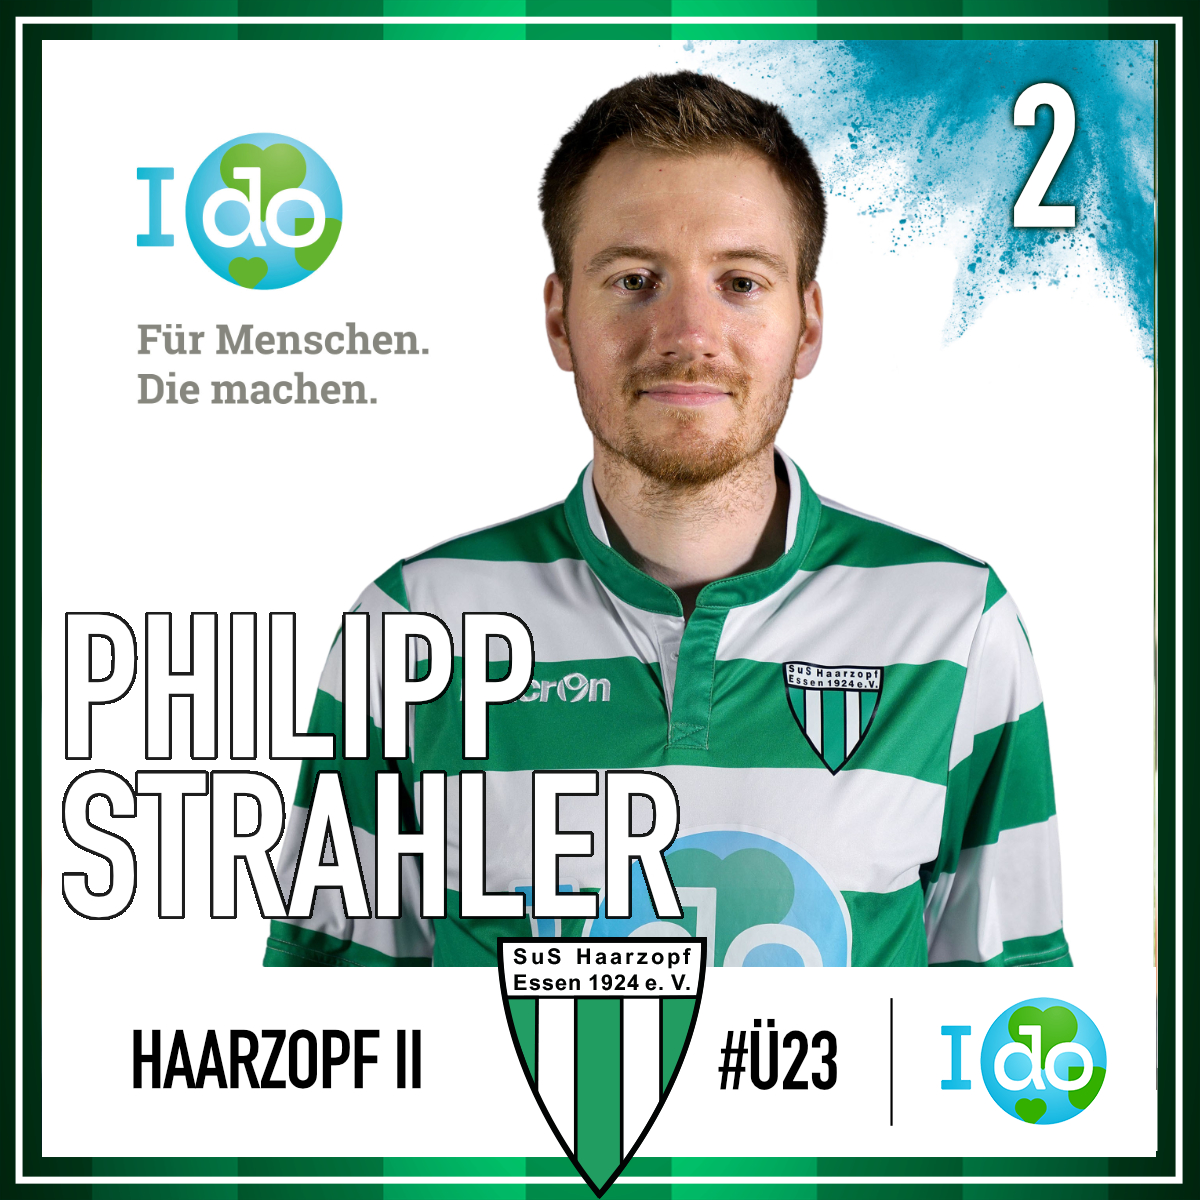 Philipp Strahler